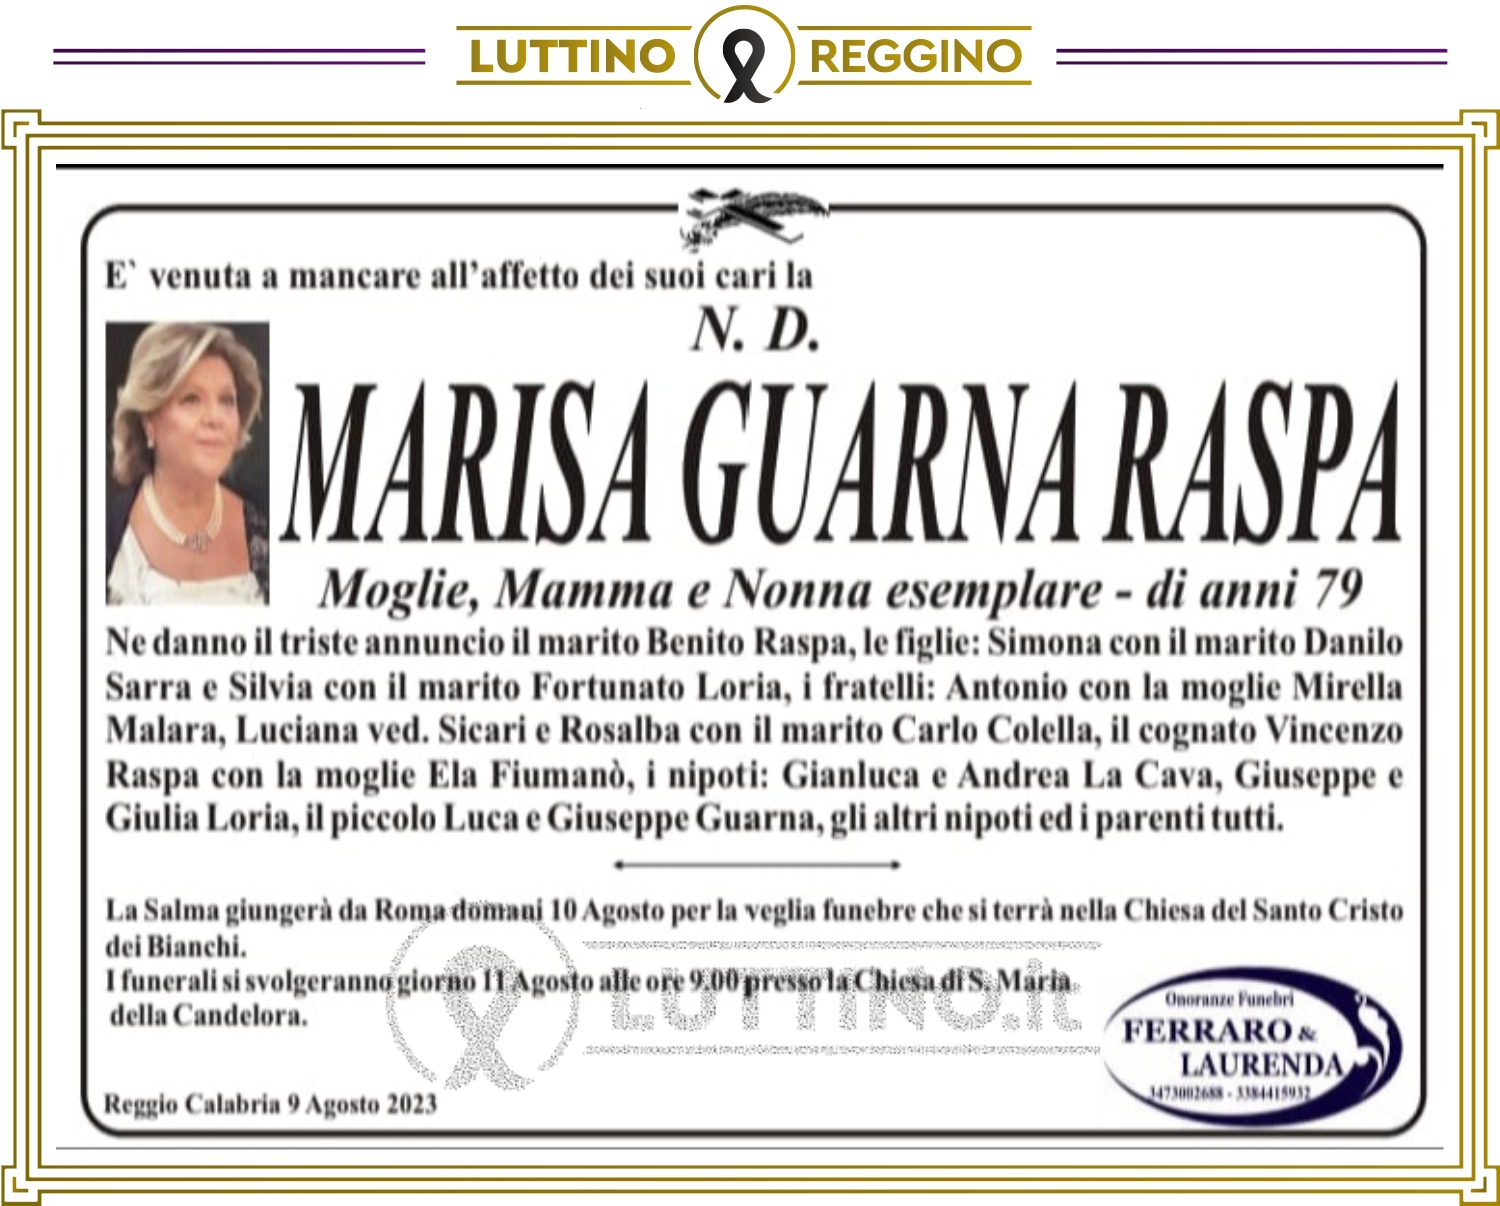 Marisa Guarna Raspa